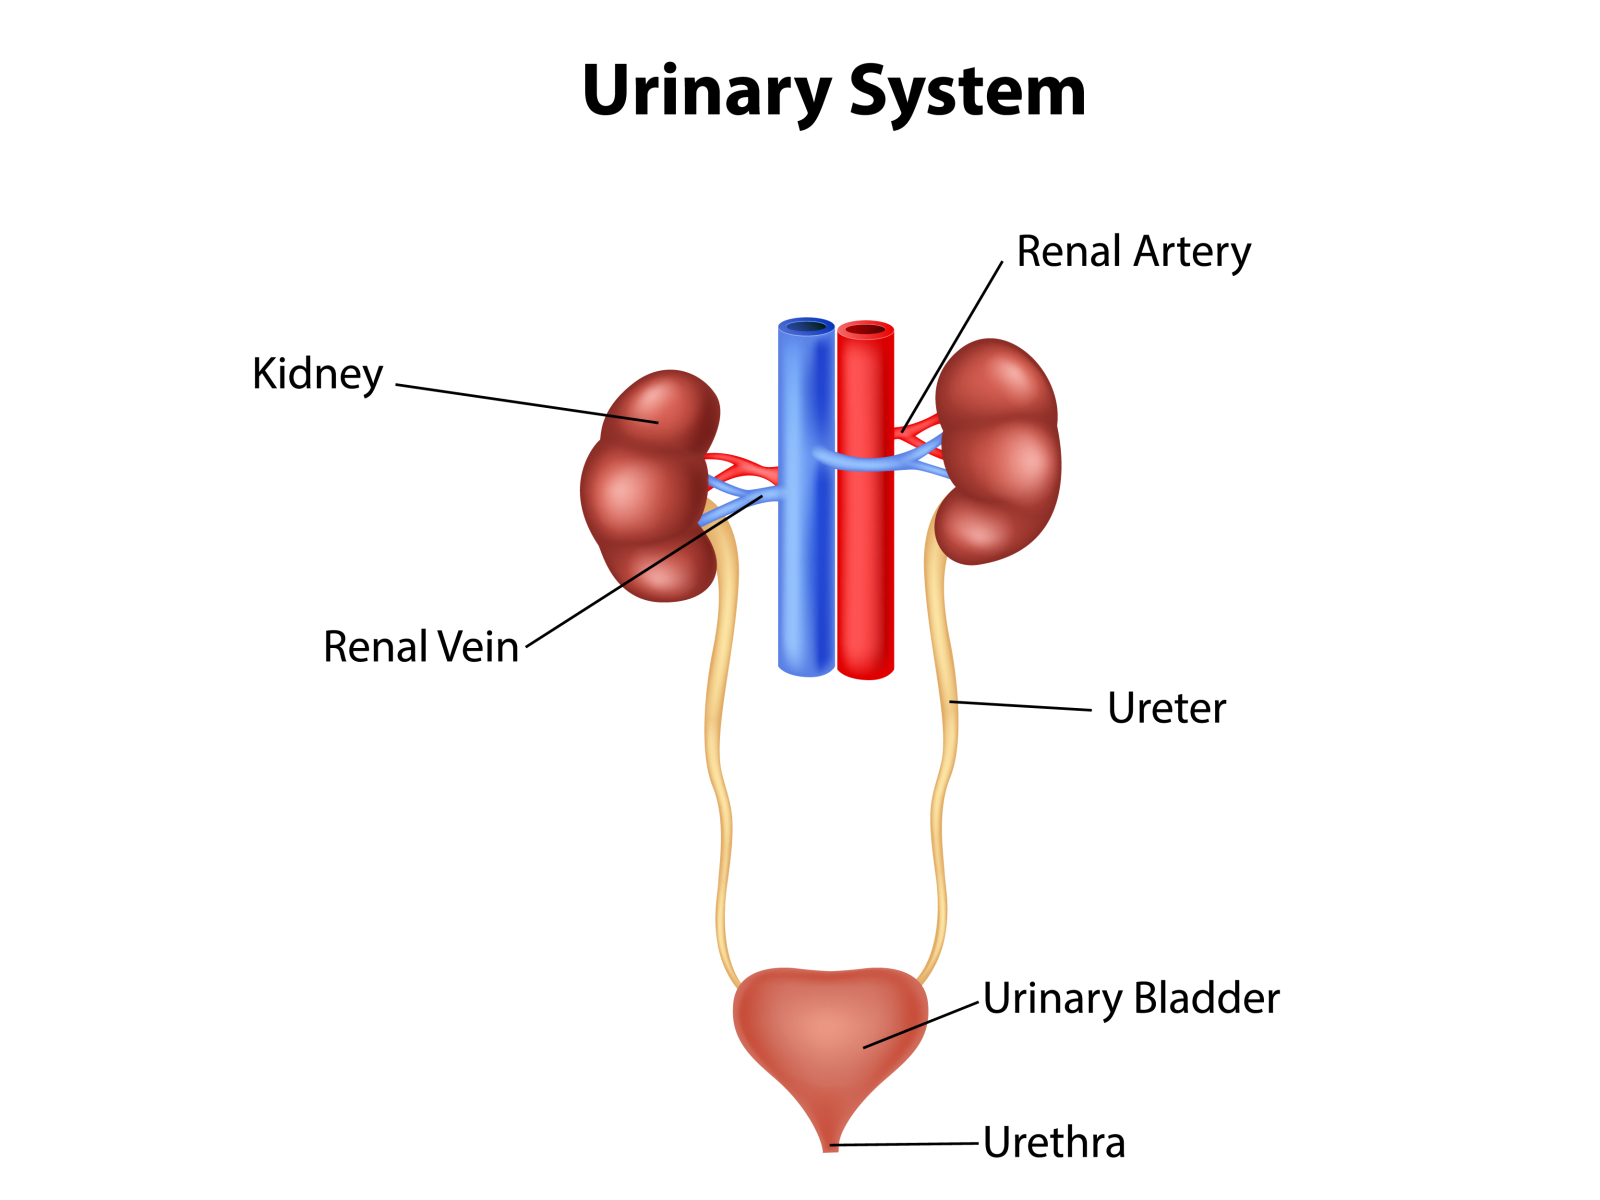 Urinary system by Tigatelu on Dribbble